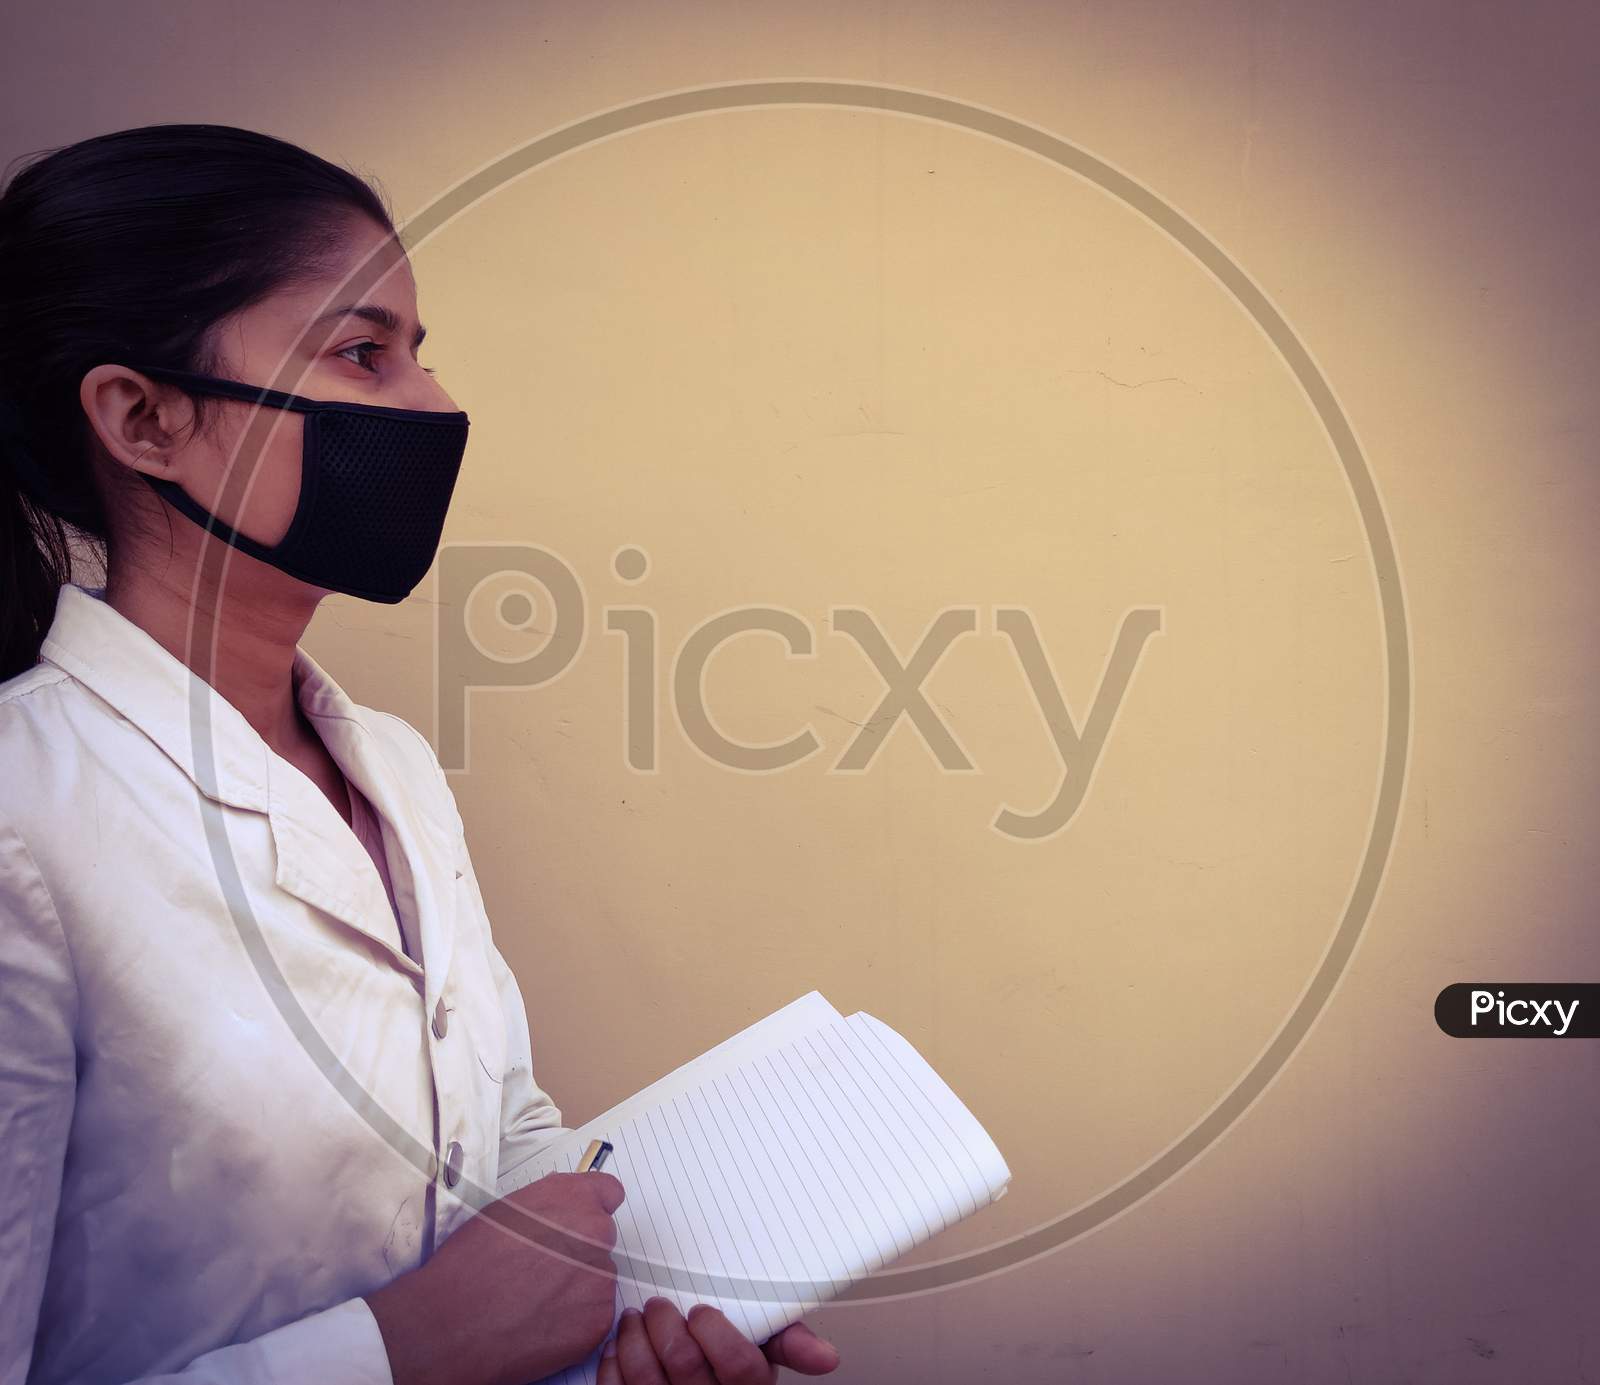 Doctor wearing mask for prevention from corona virus